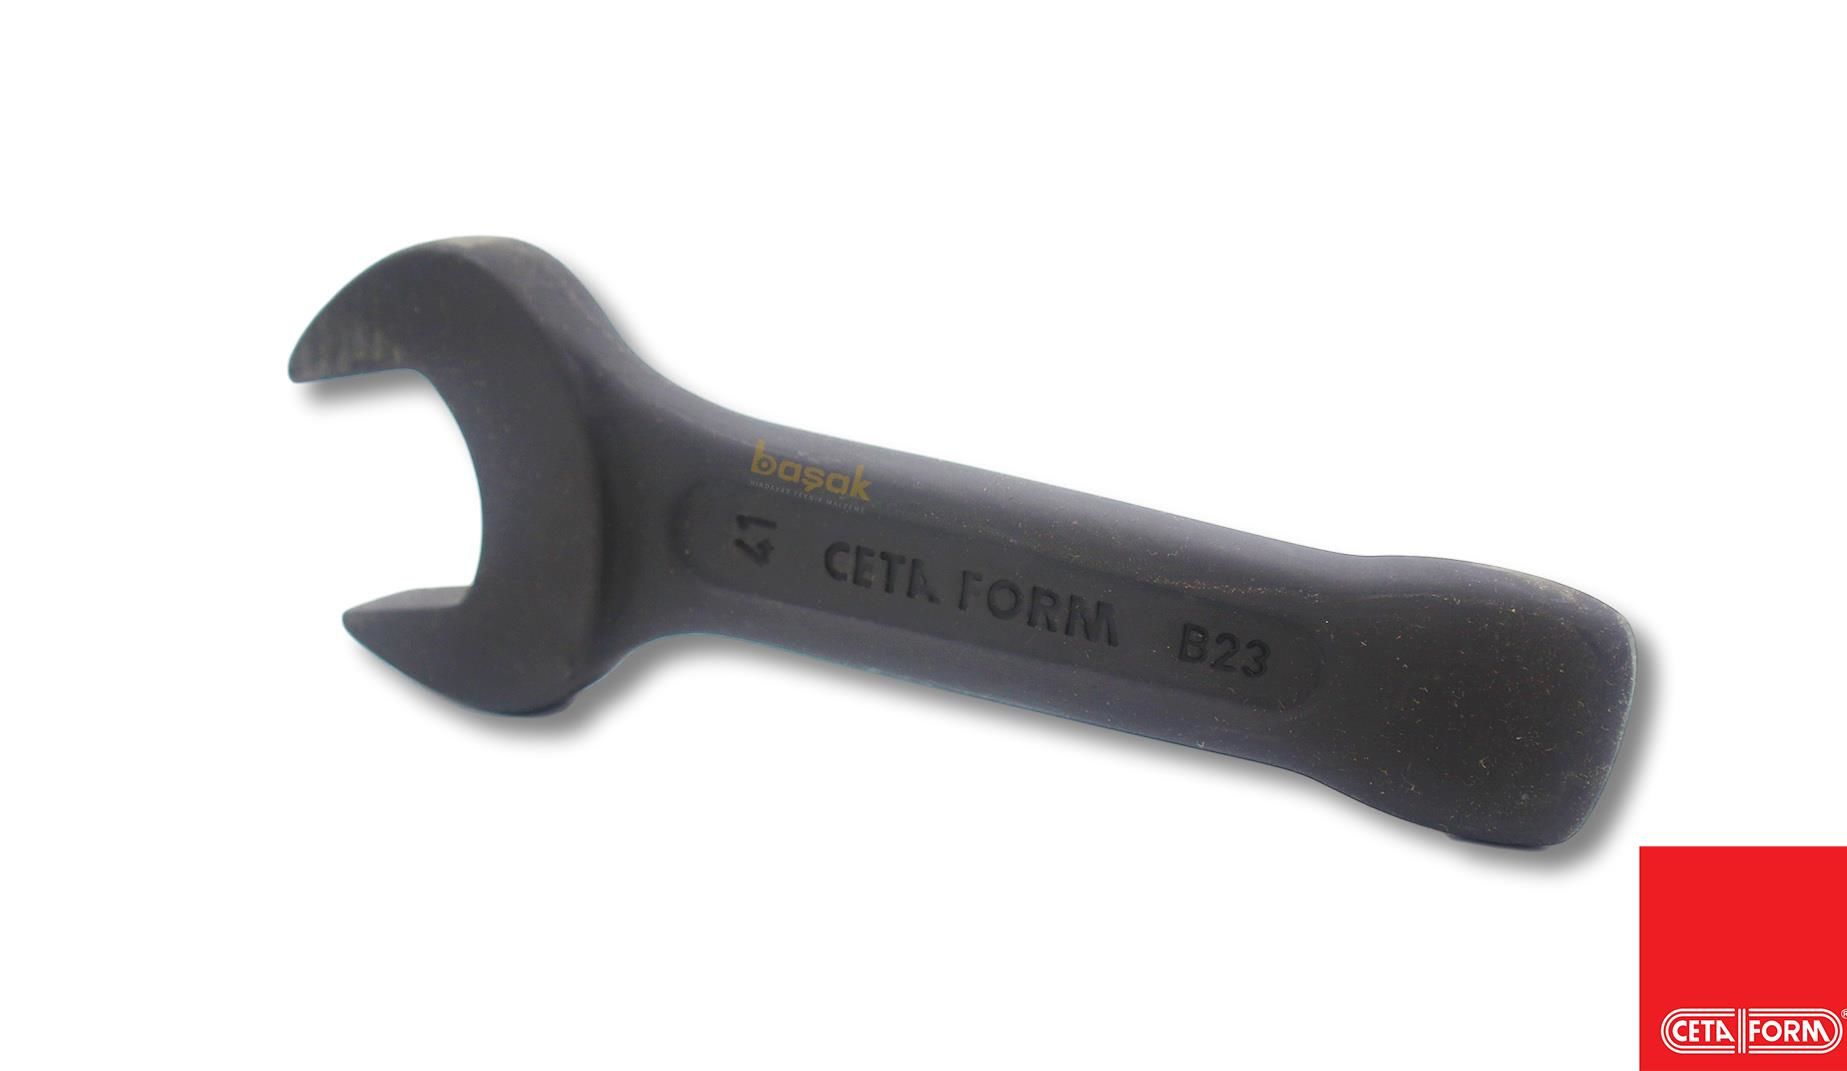 Ceta Form 41 mm Açık Ağız Darbeli (Çakma) Anahtar B23-41